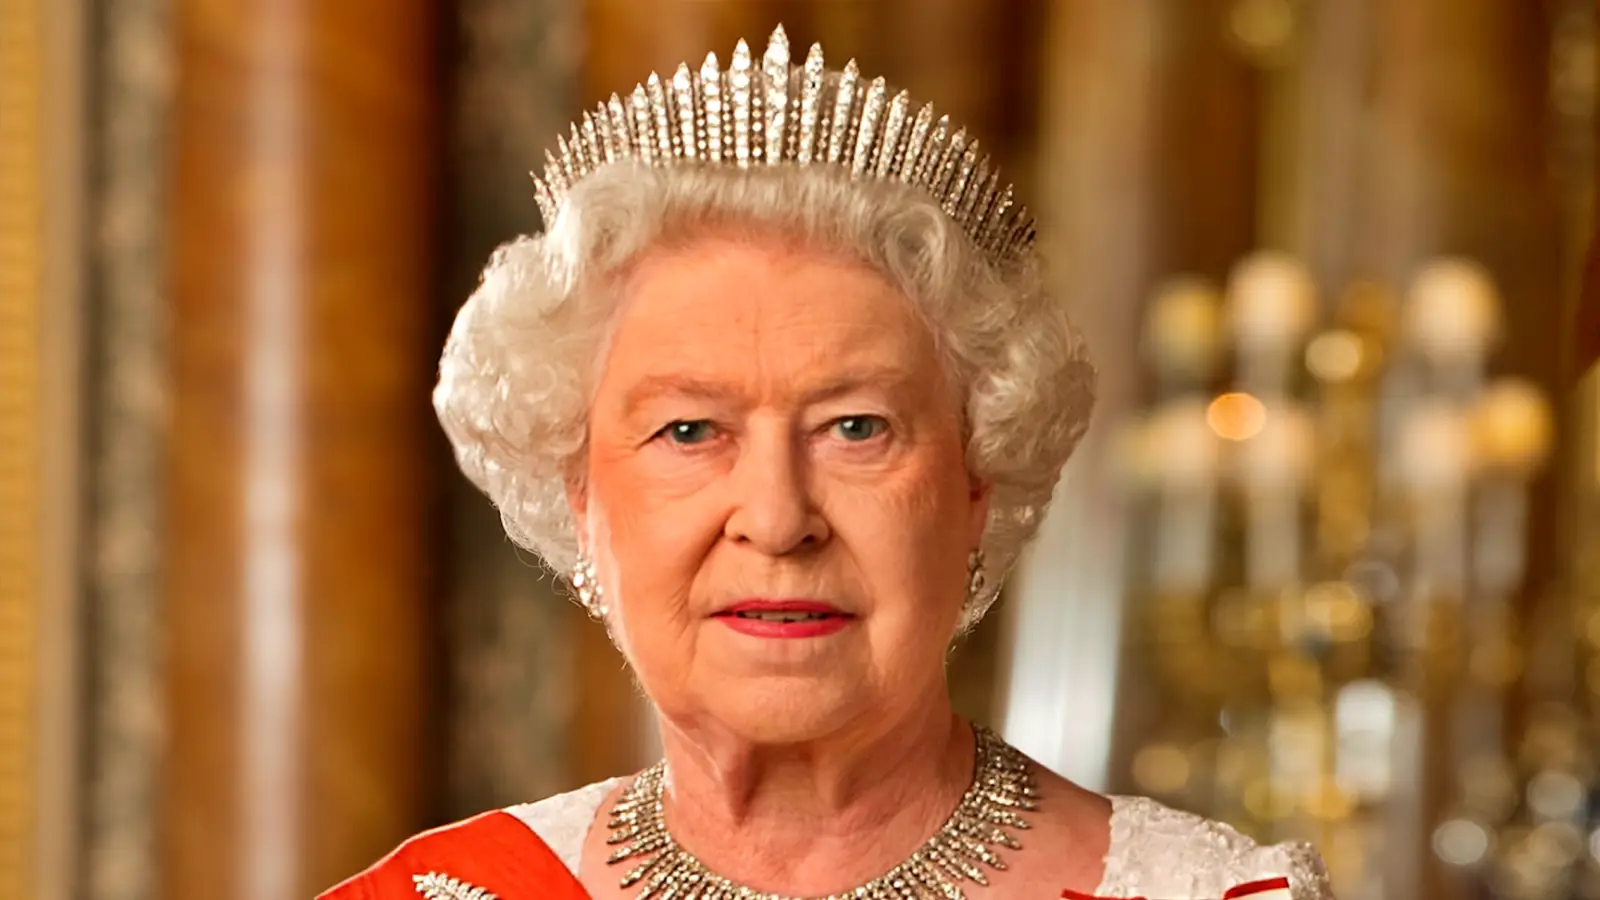 Kuningatar Elisabet II kuoli Ison-Britannian kuningas Kaarle III